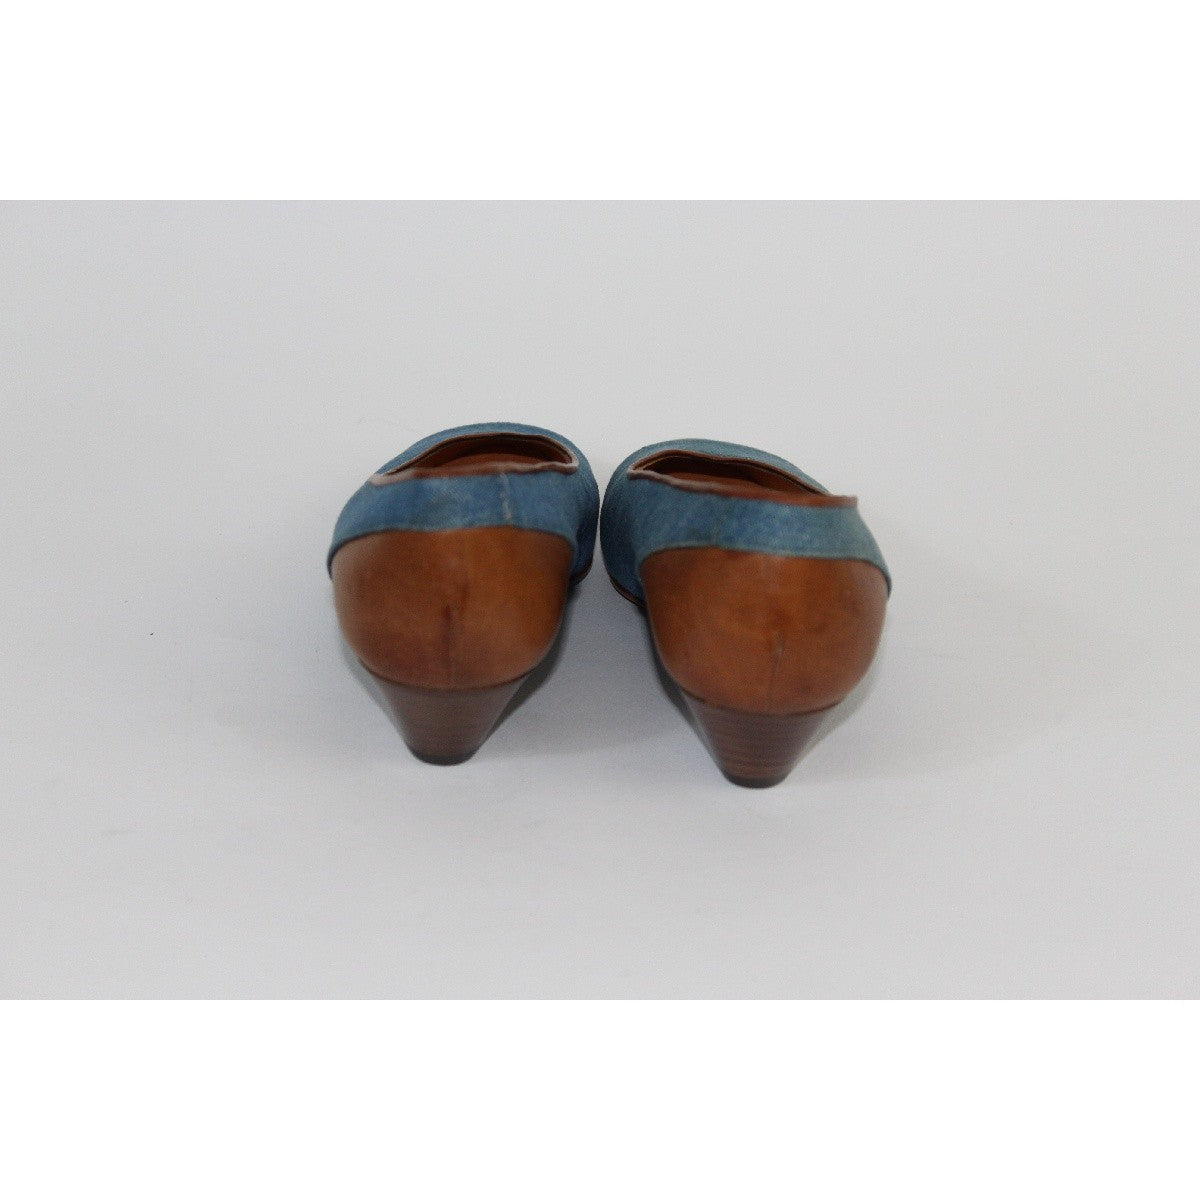 Arfango Vintage Blue Leather Heel Shoes